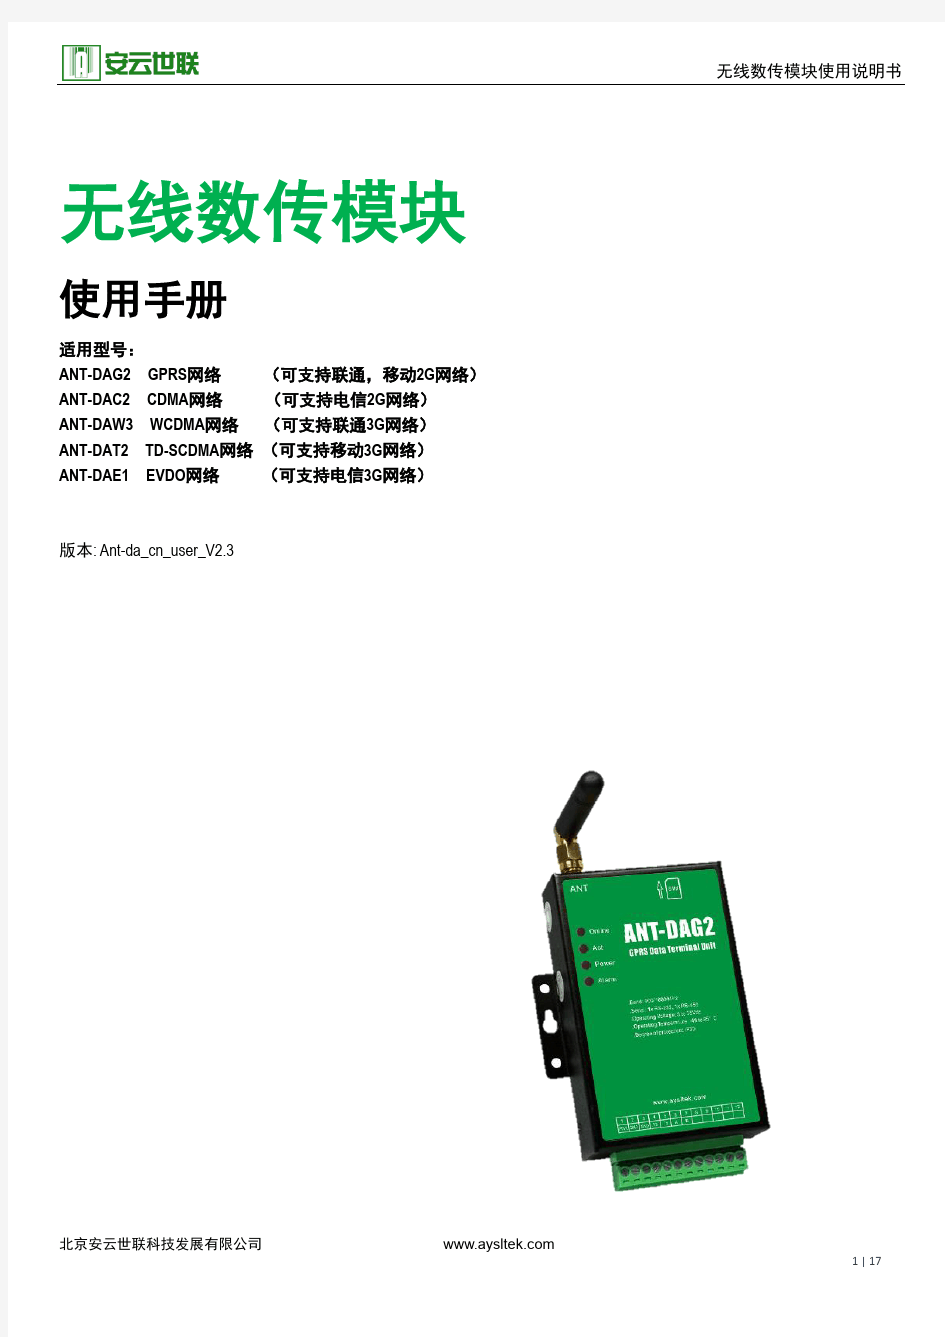 Ant-da系列GPRS无线模块使用手册__cn_user_V2.3_20151230